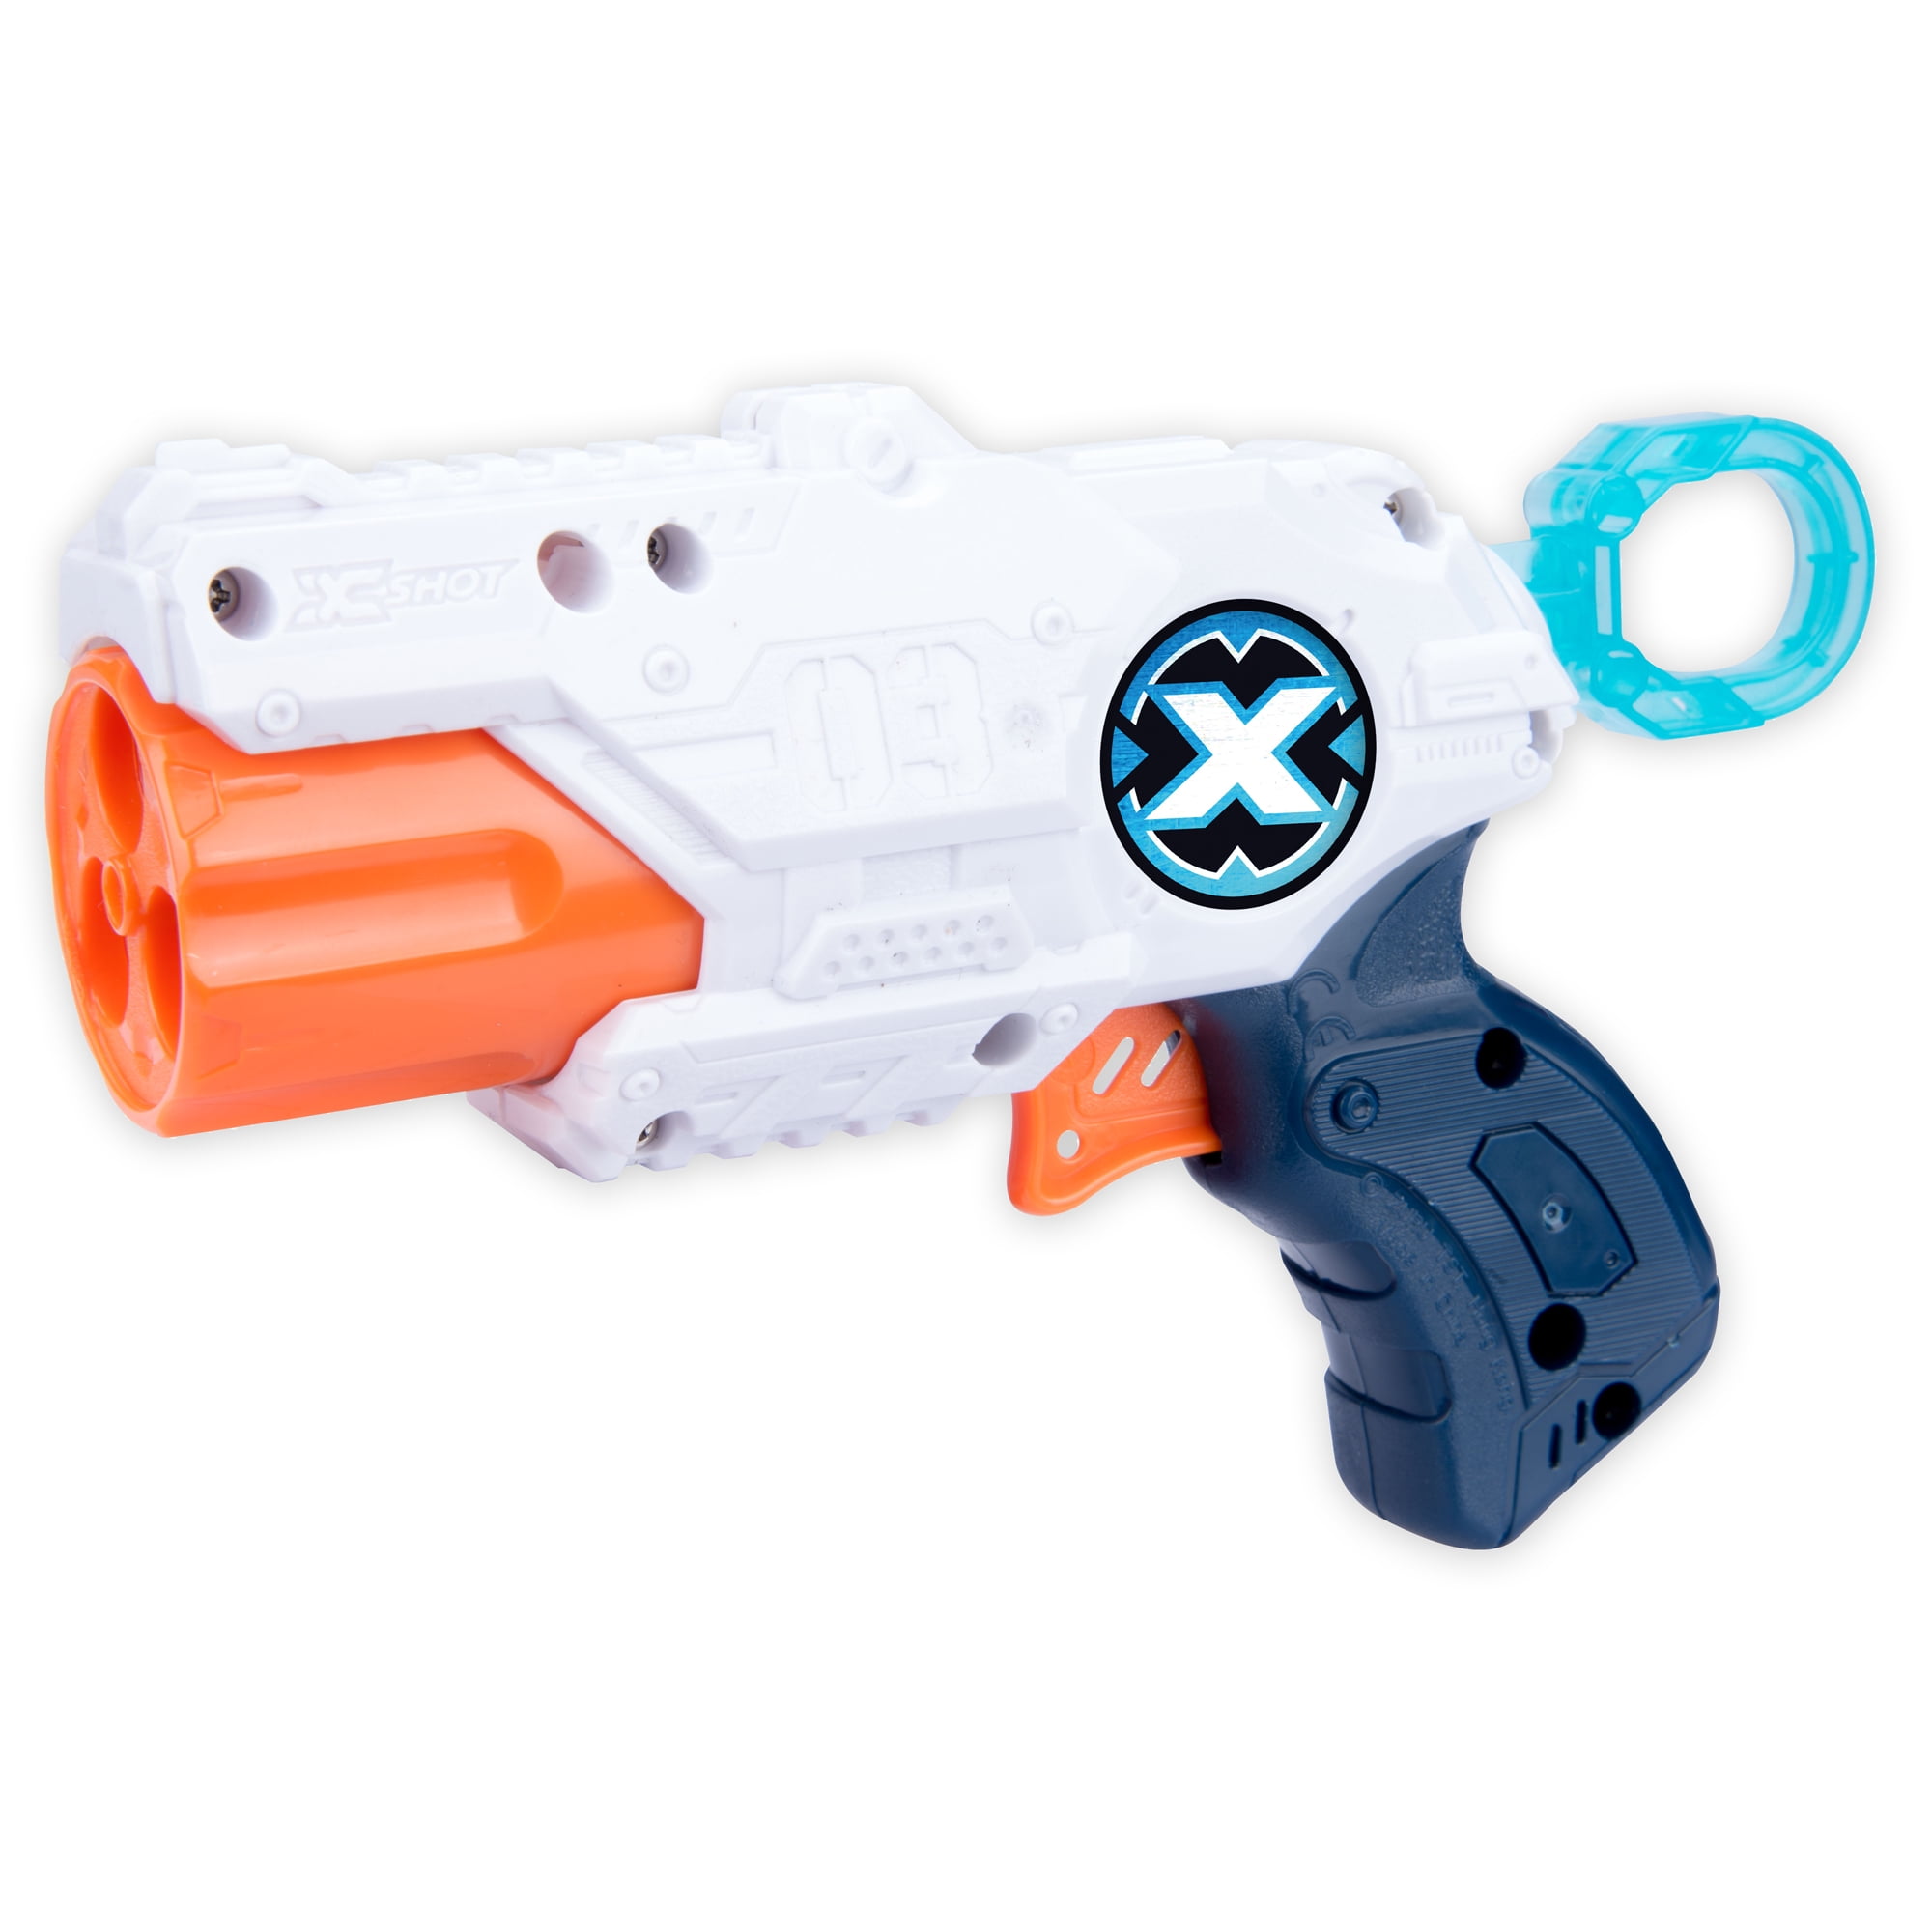 Details about   NEW Zuru X Shot MK3 Includes 12 Foam Darts XShot Toy Gun 